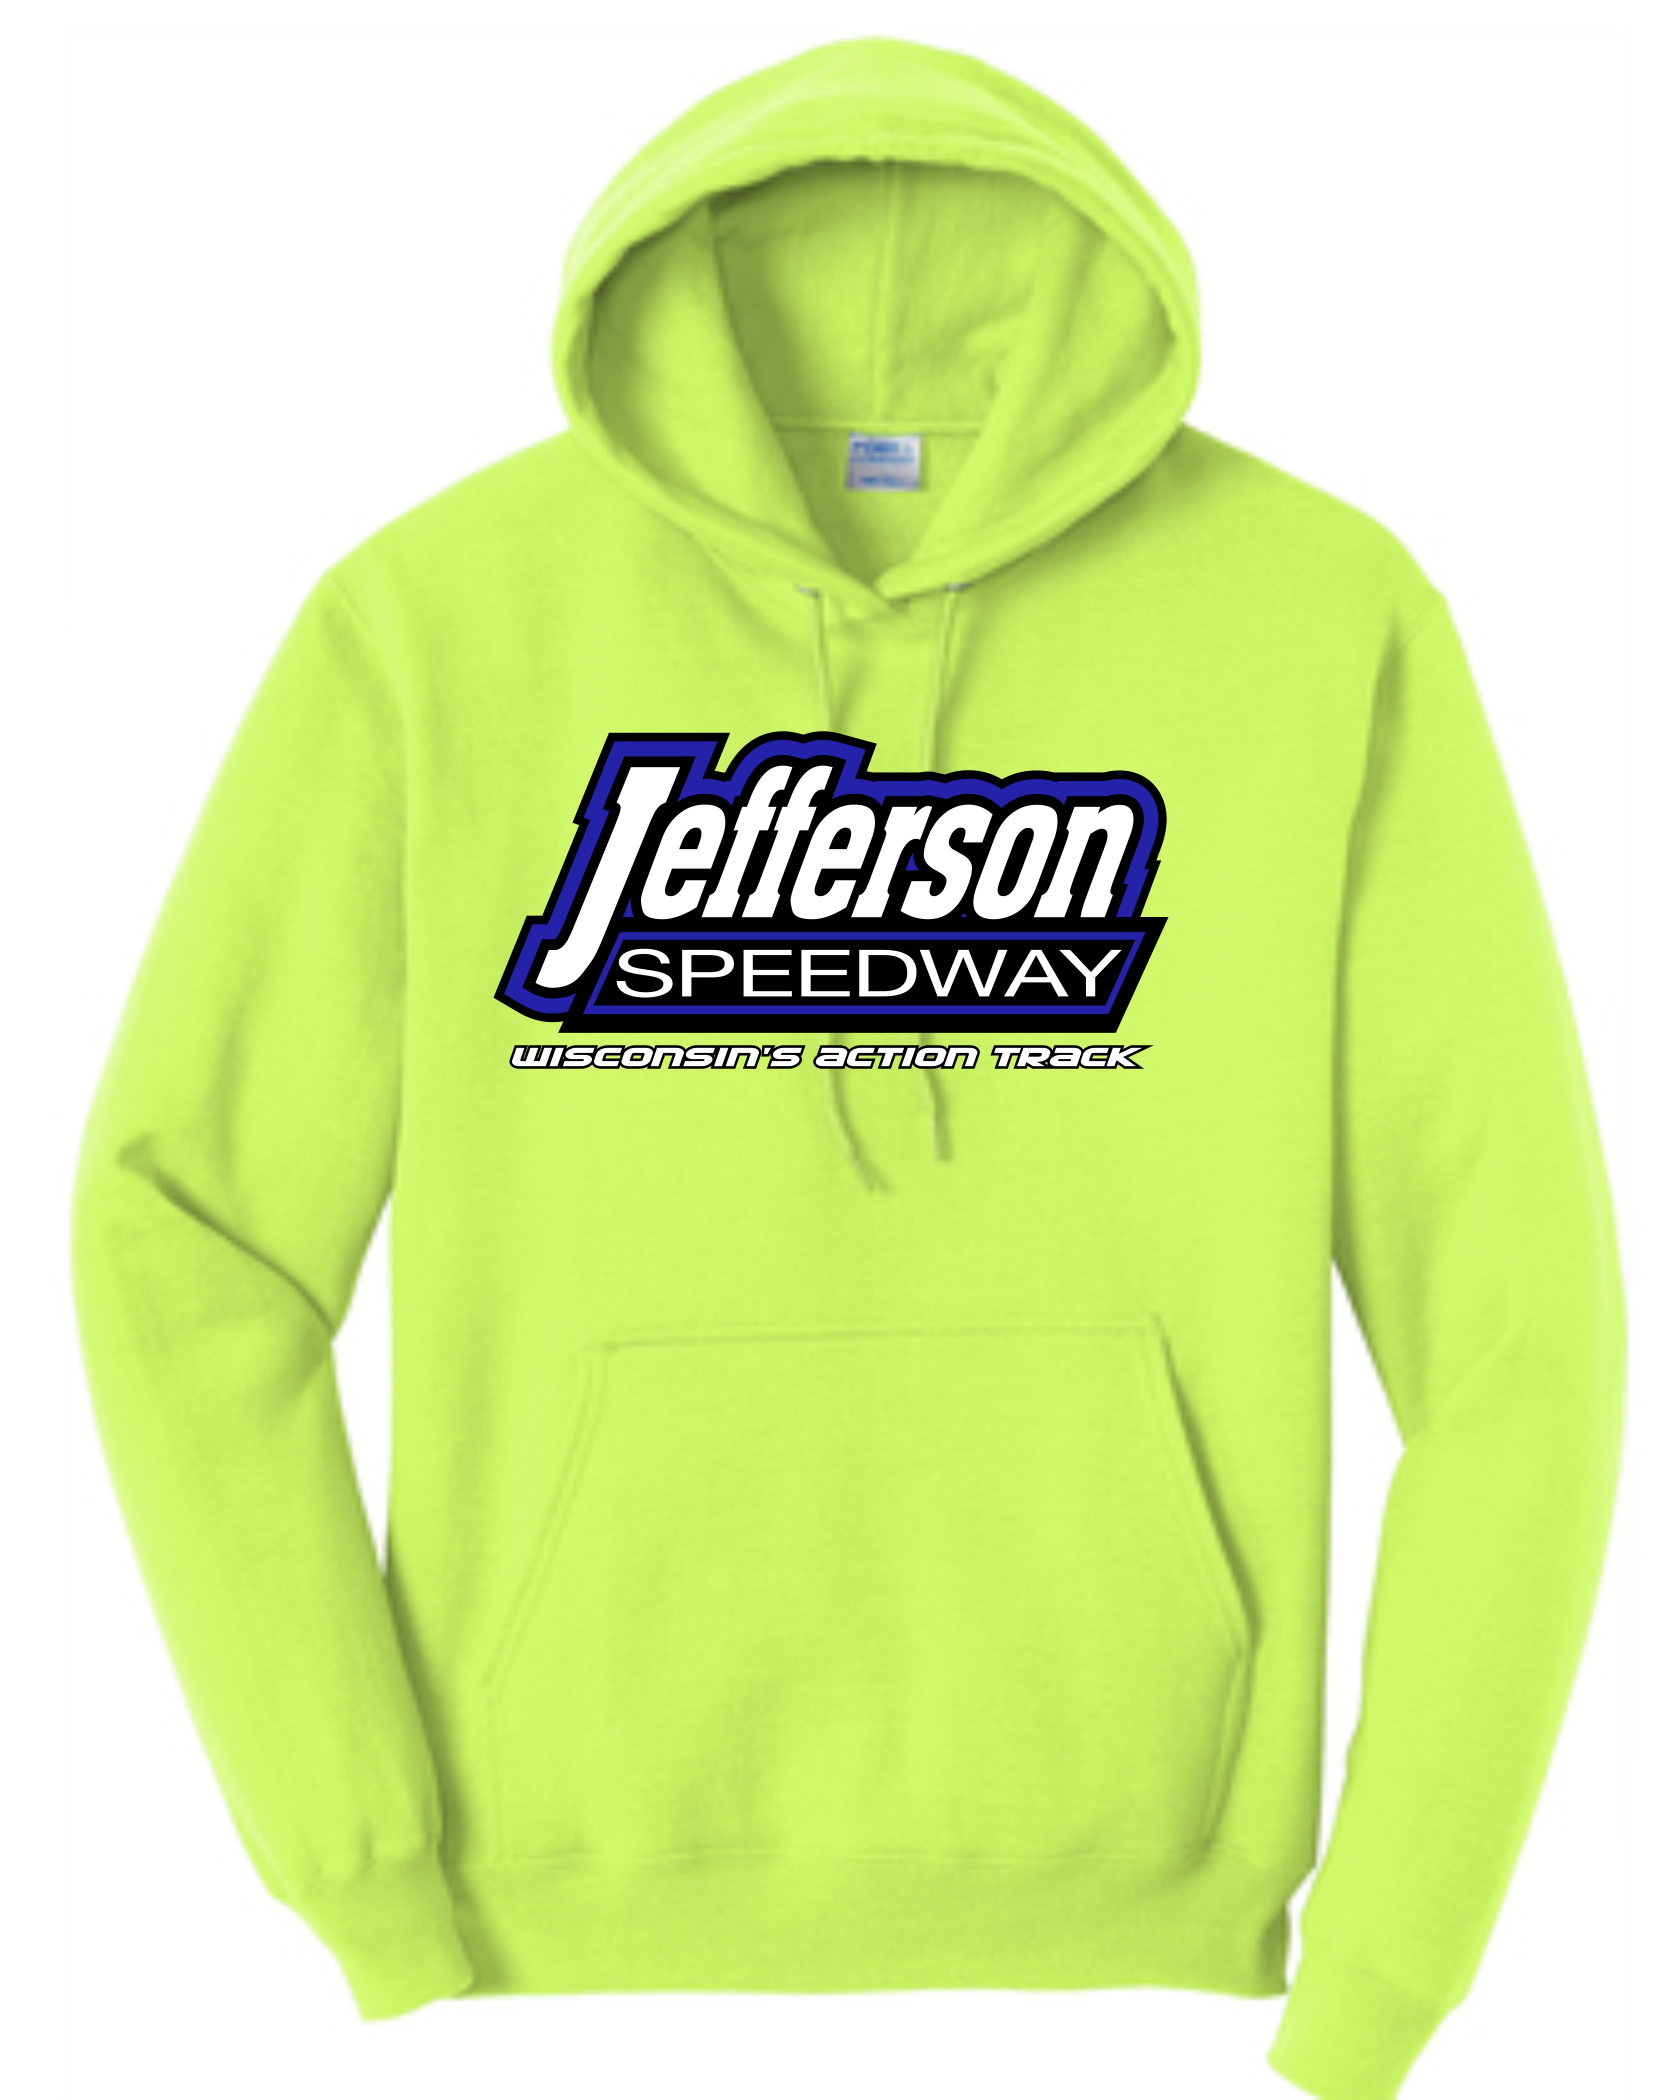 Jefferson Speedway Traditional Hooded Sweatshirt